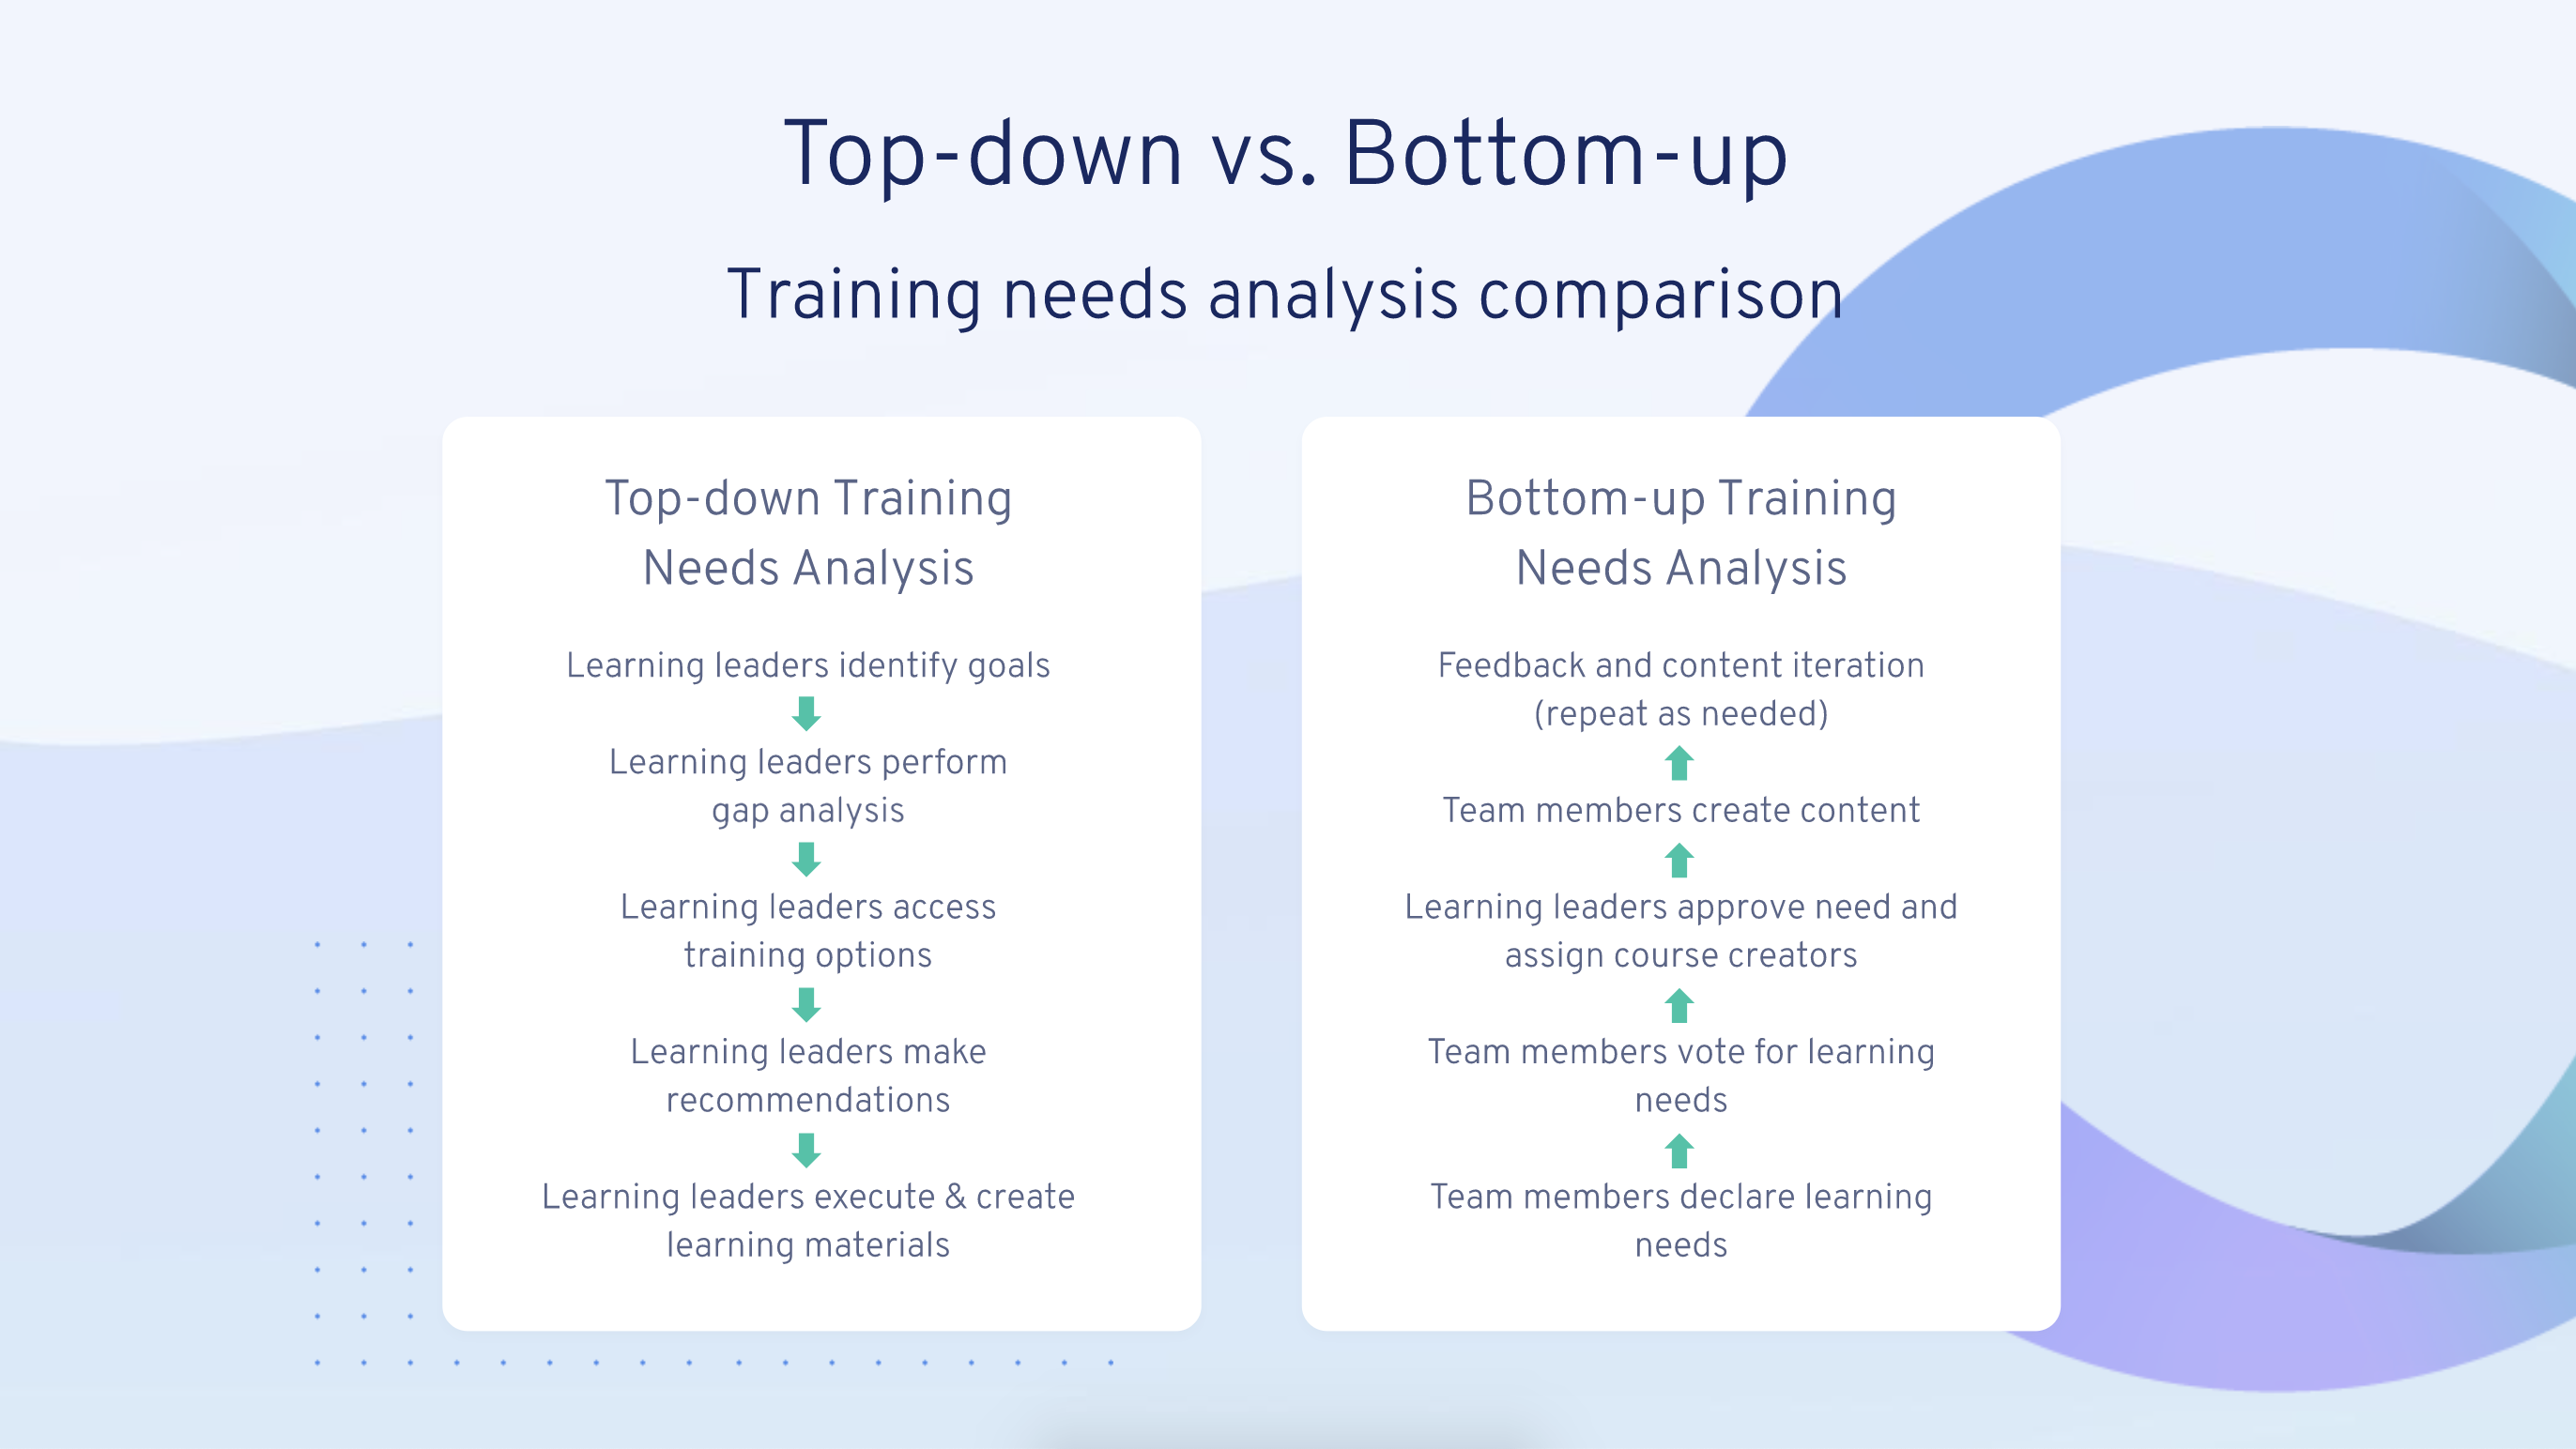 Top-down vs. Bottom-up Training Needs Analysis Comparison